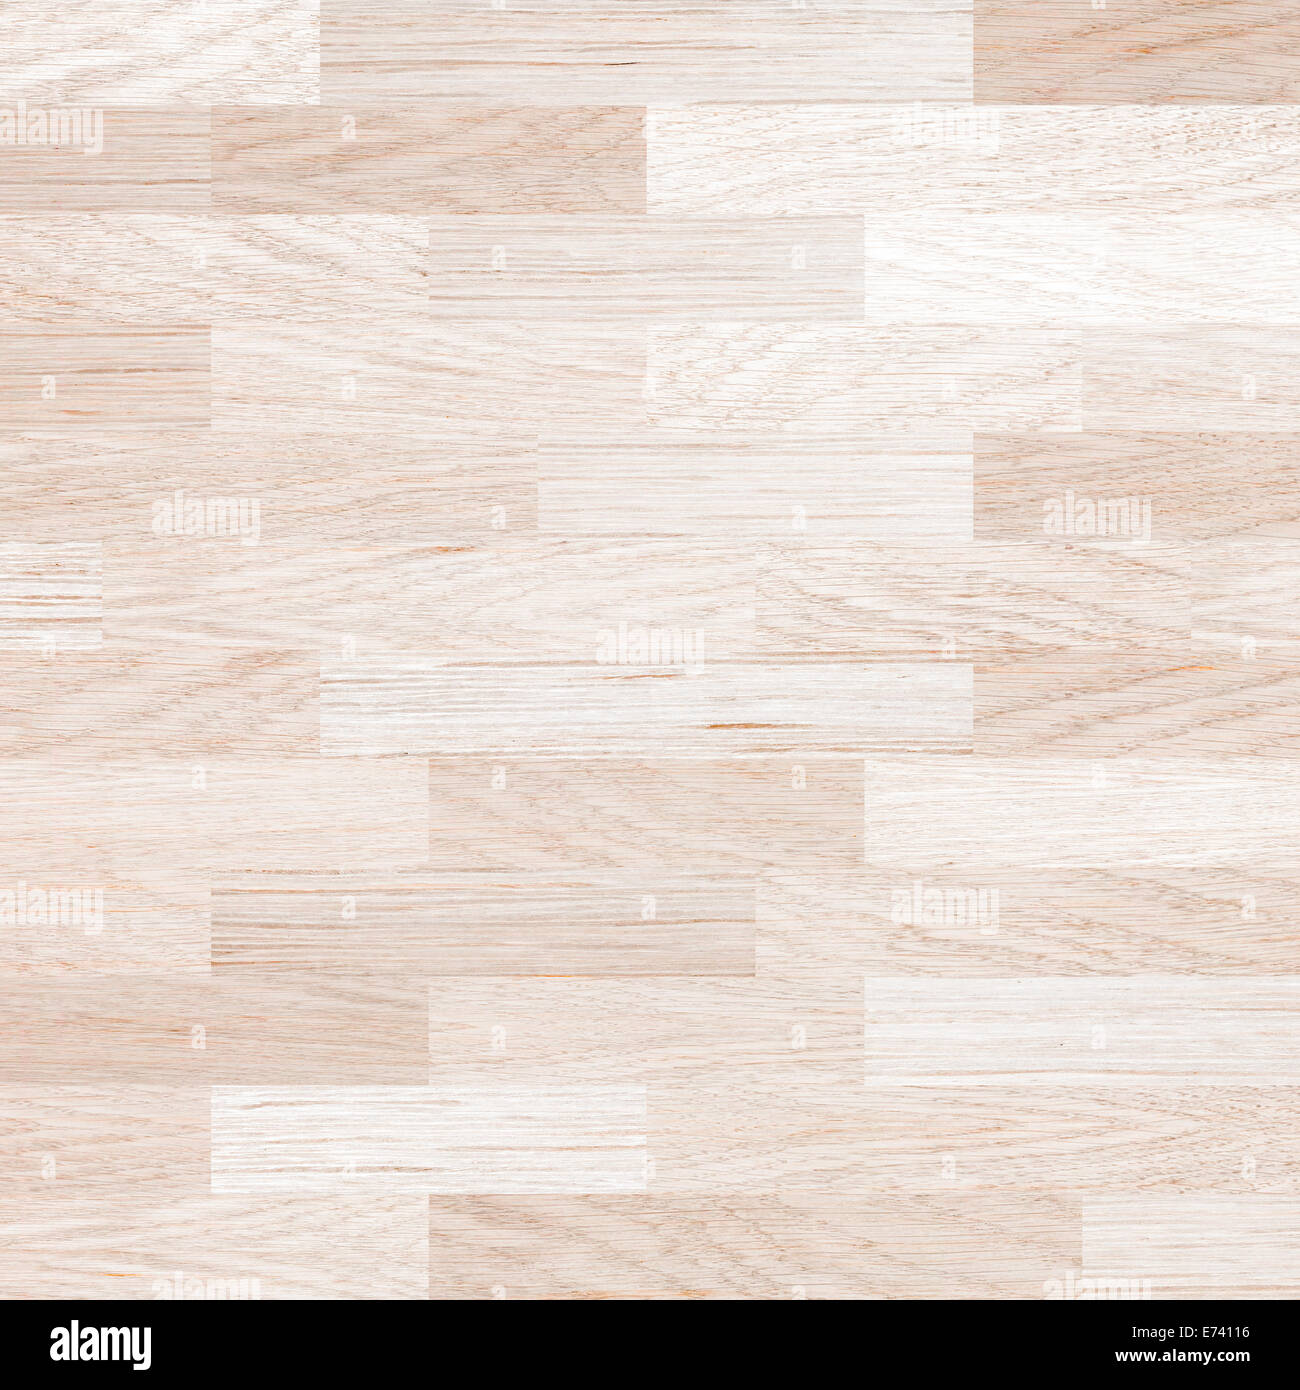 wooden floor parquet background Stock Photo